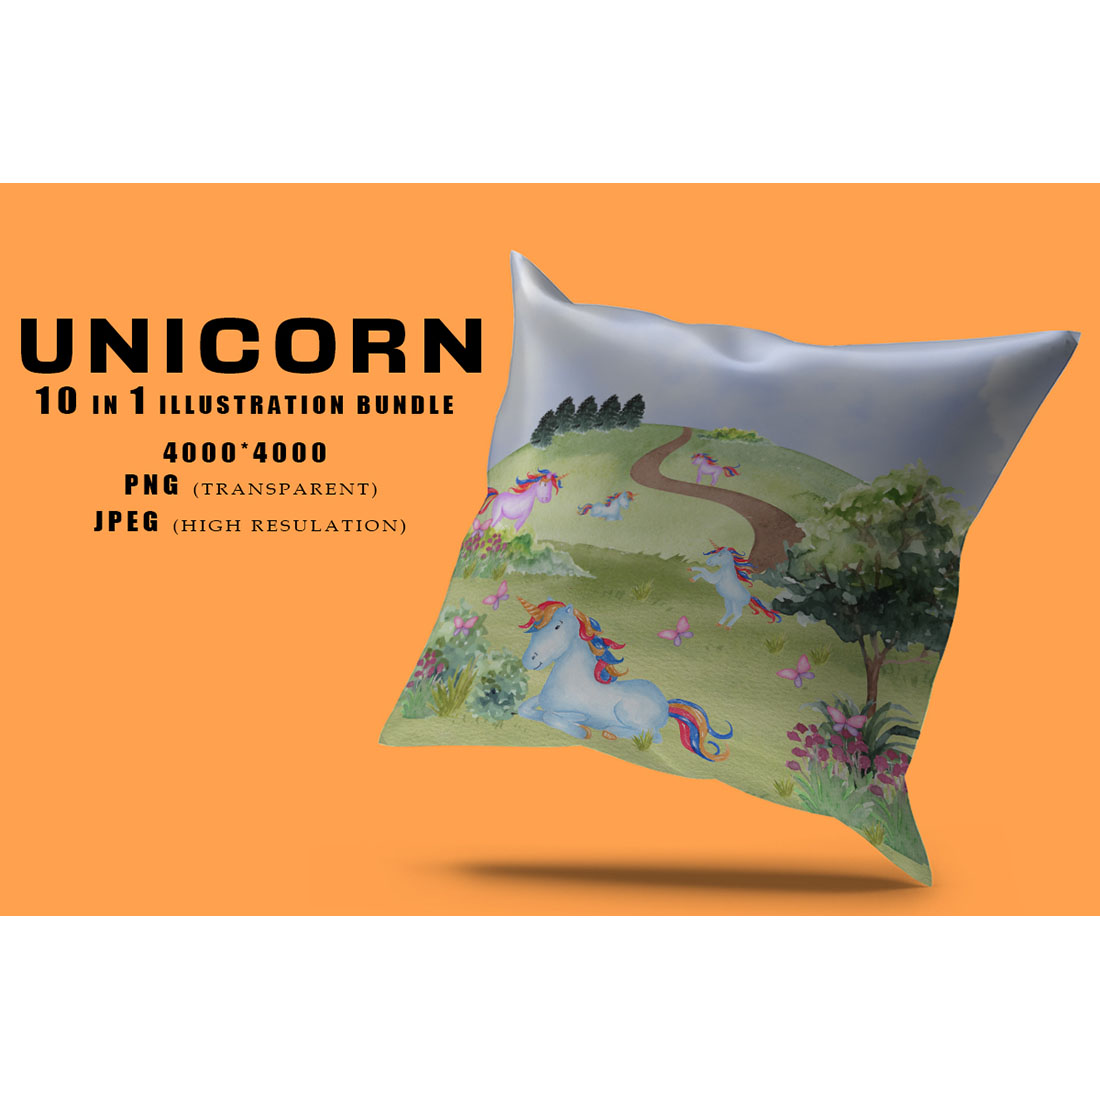 Pillow image with unique unicorn print